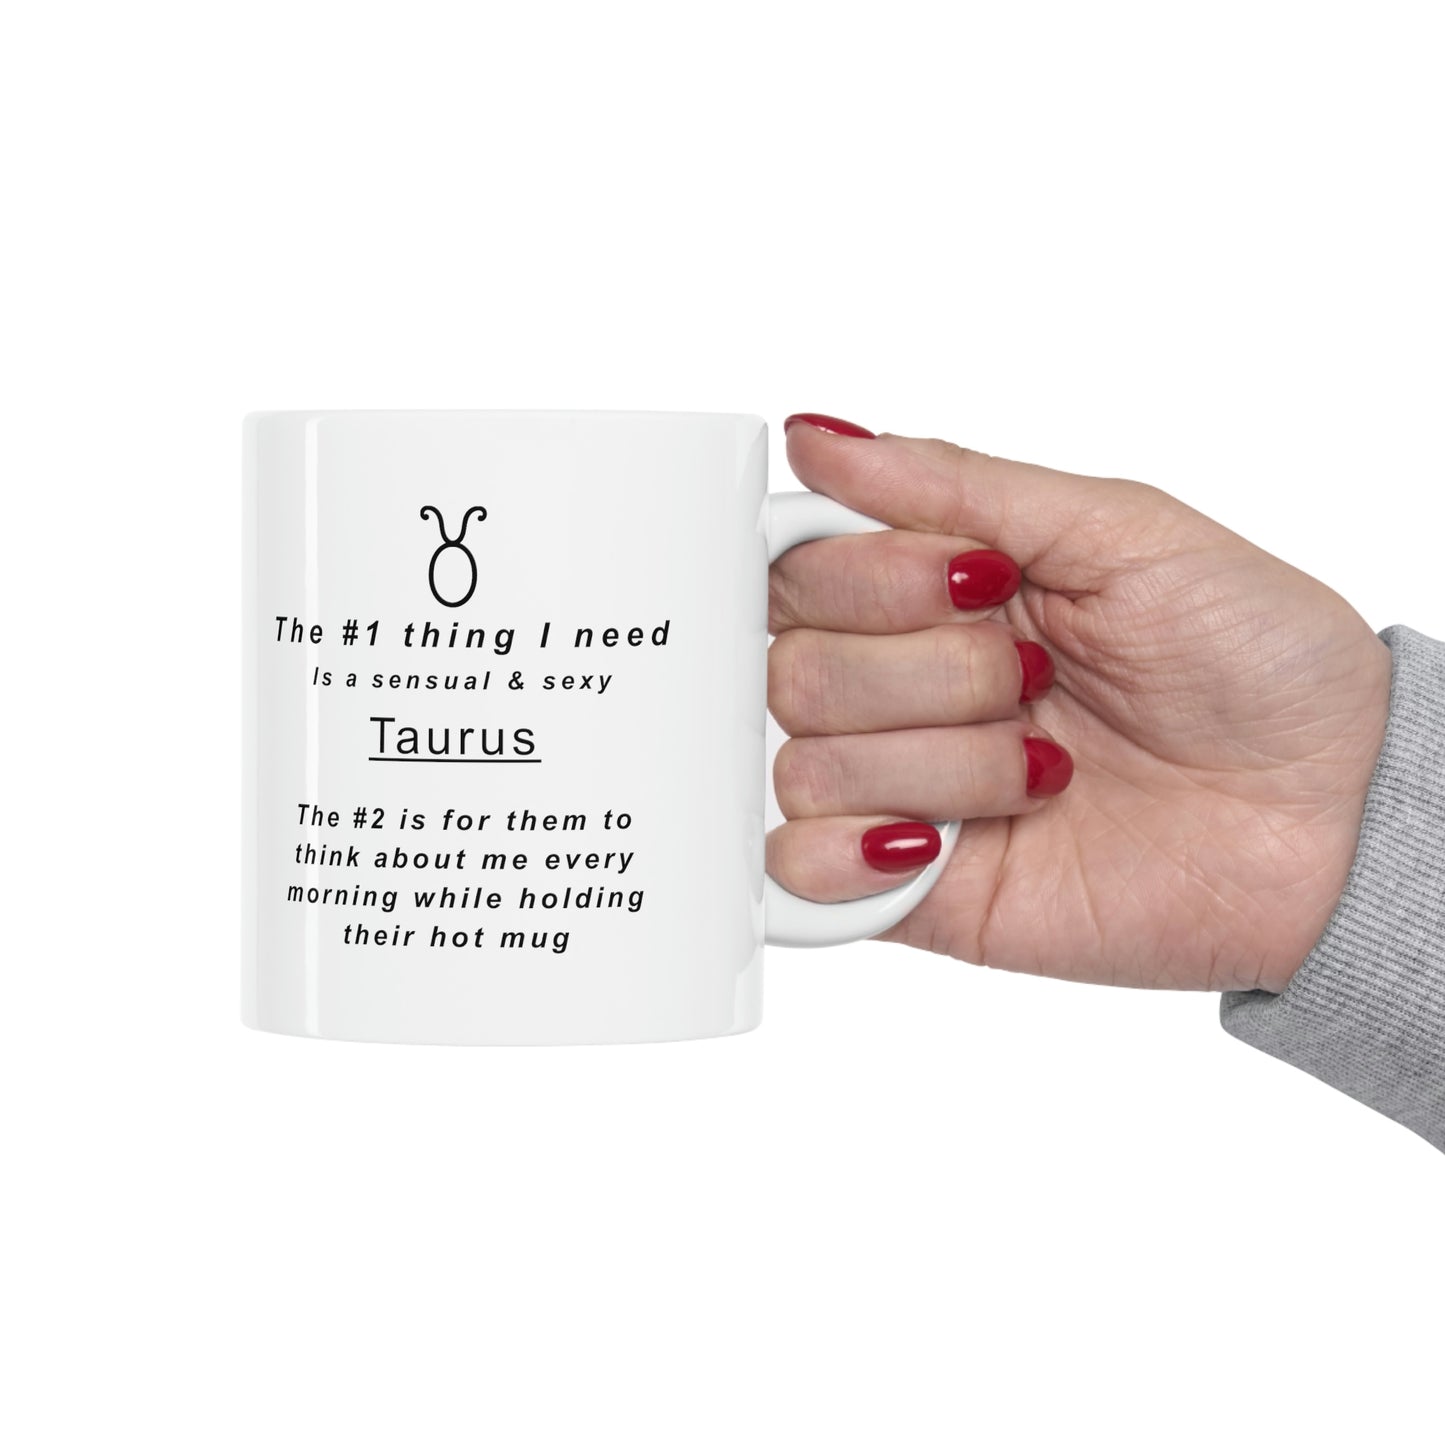 Taurus Mug: "To My Sexy Taurus" - full text in description